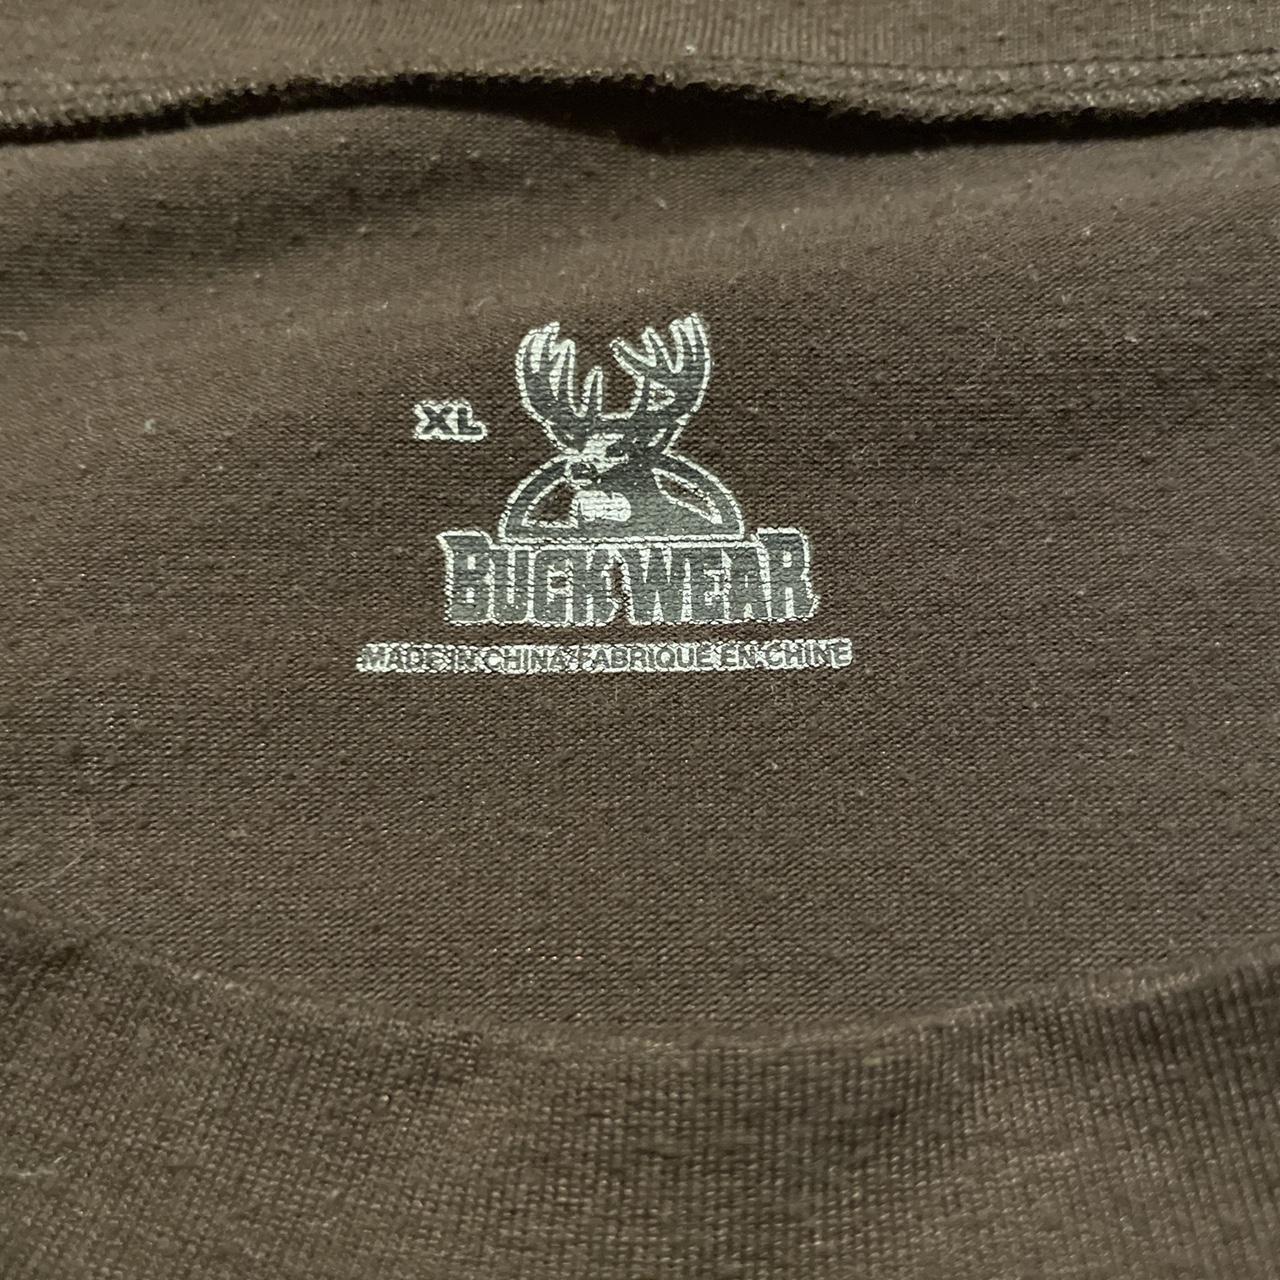 Product Image 3 - BuckWear Sleeve

DESIGN IS SUPER NICE

size